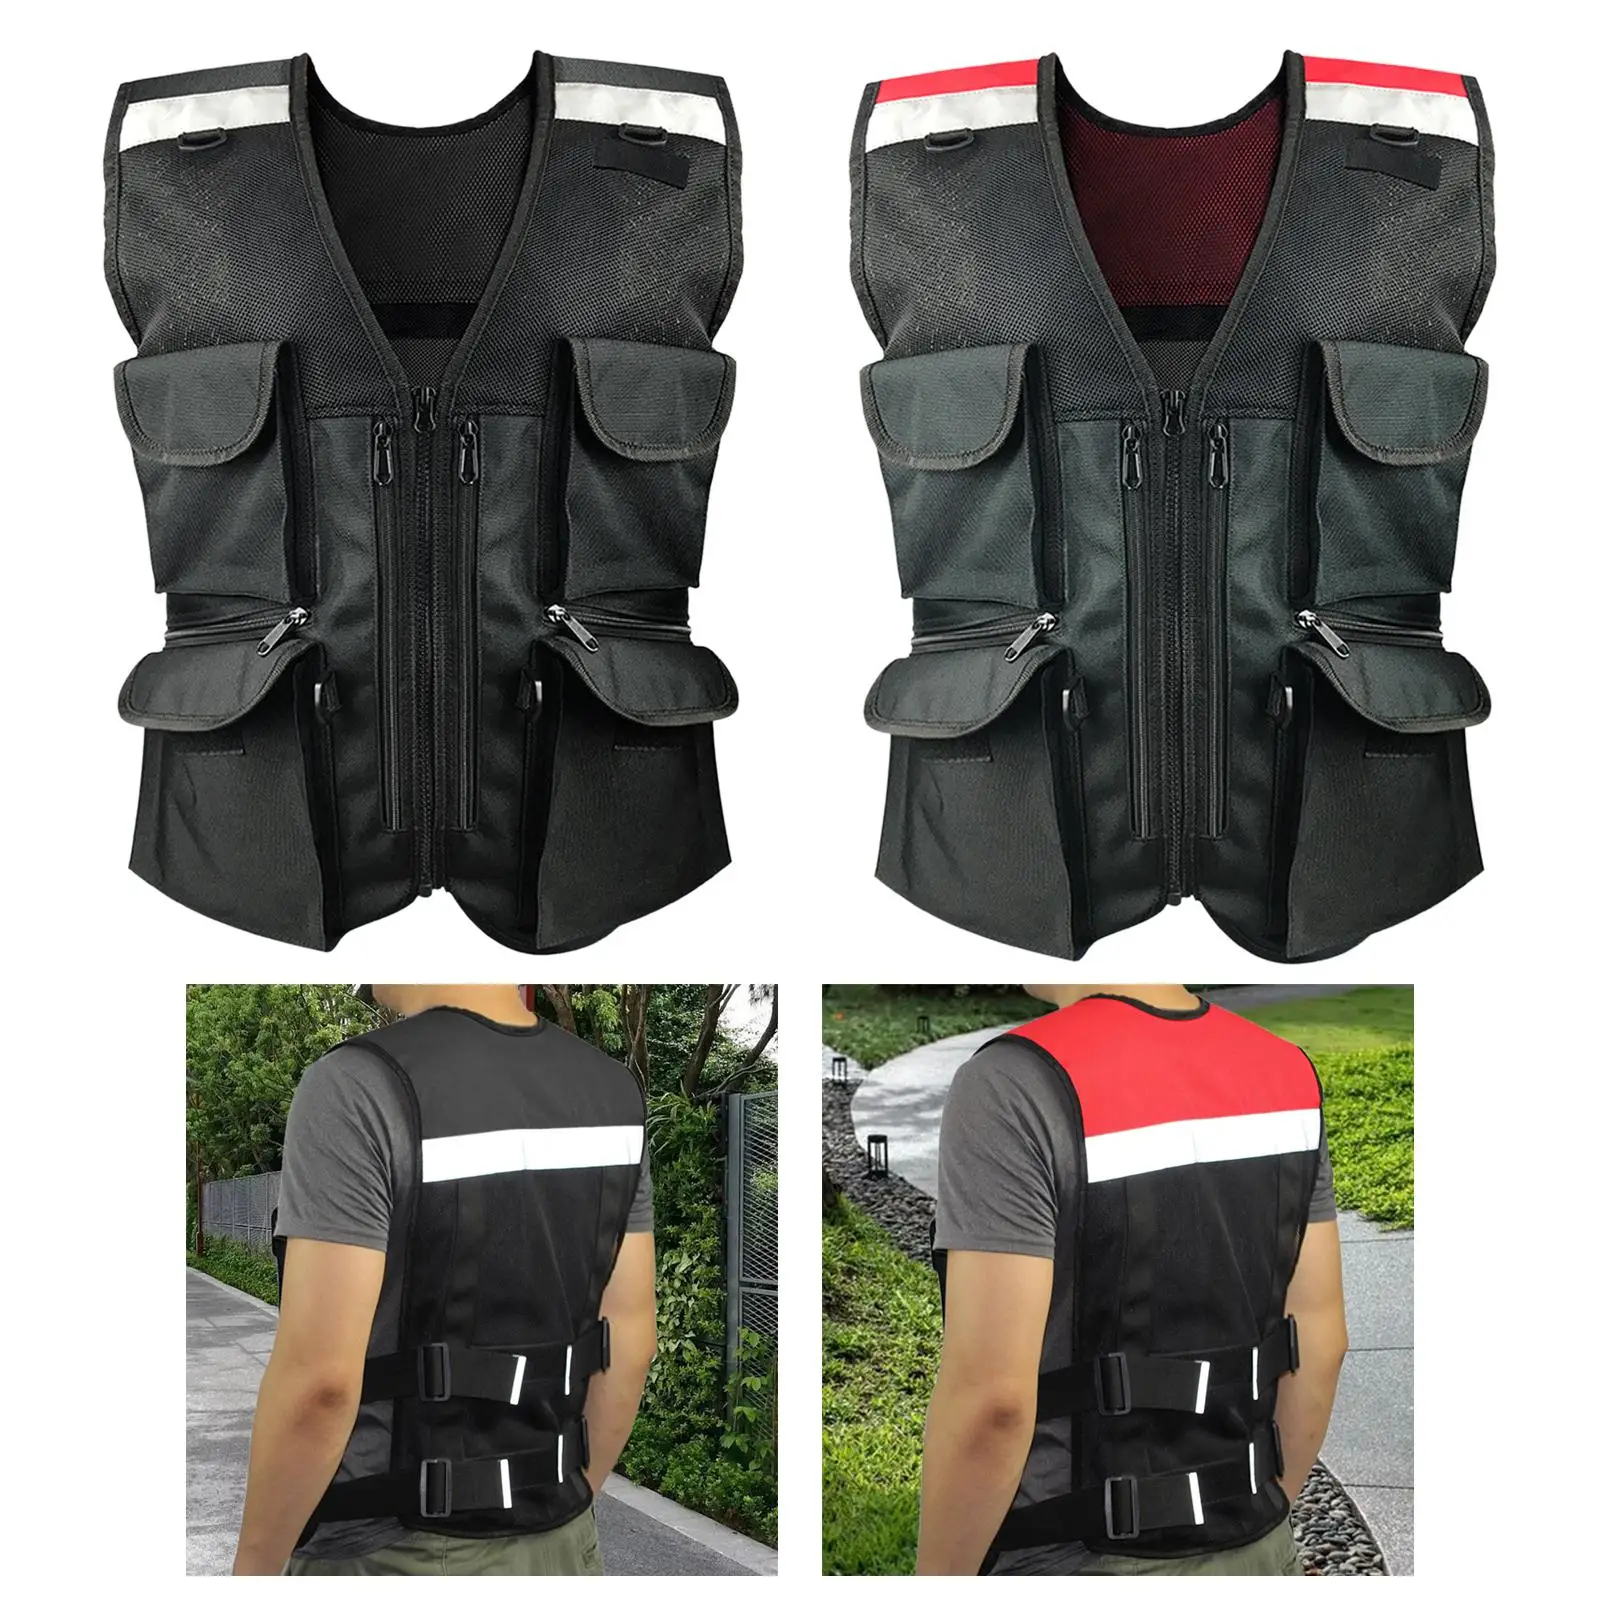 Reflective Safety Vest Multi Pockets Safety Clothing Zipper Front Construction Security Vest for Biking Night